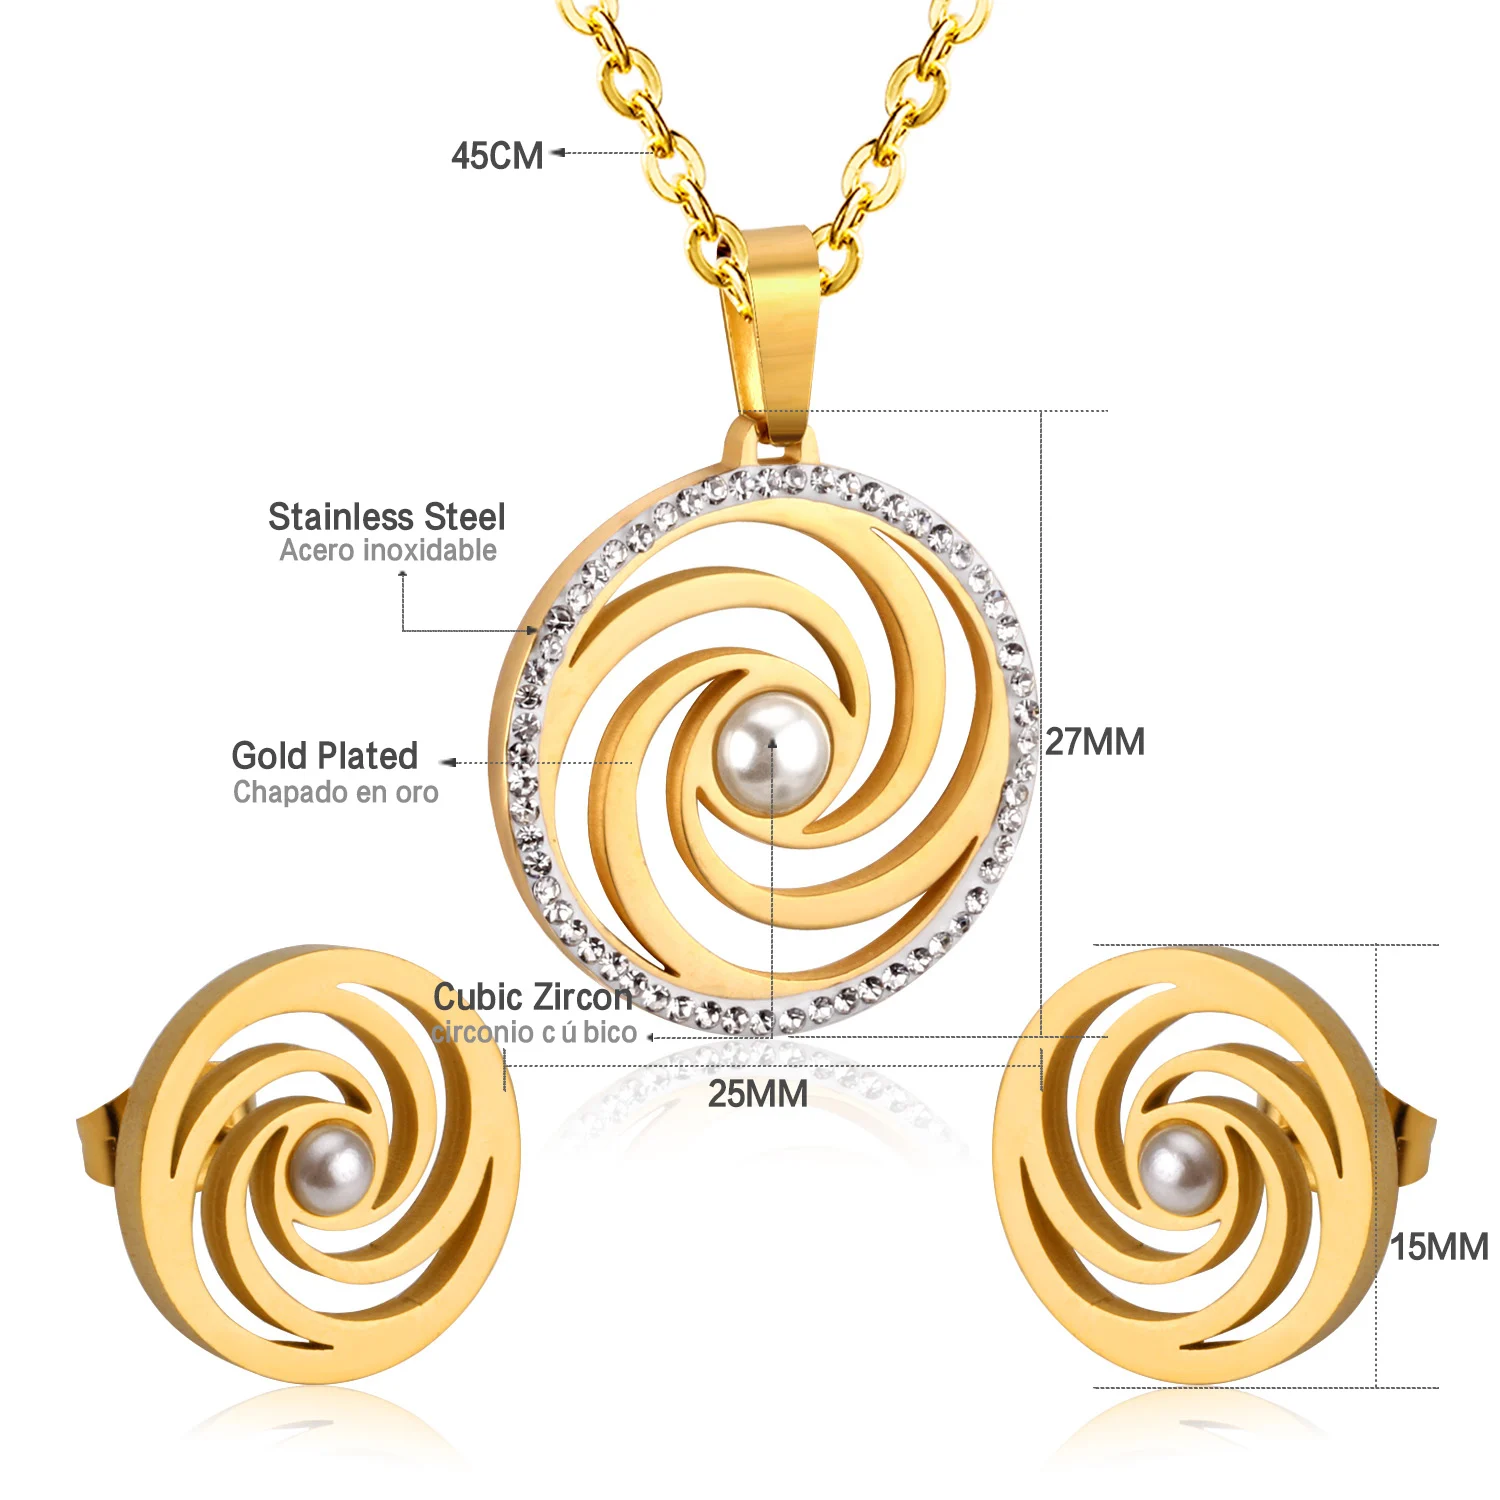 cheap jewelry set gold pendant necklace